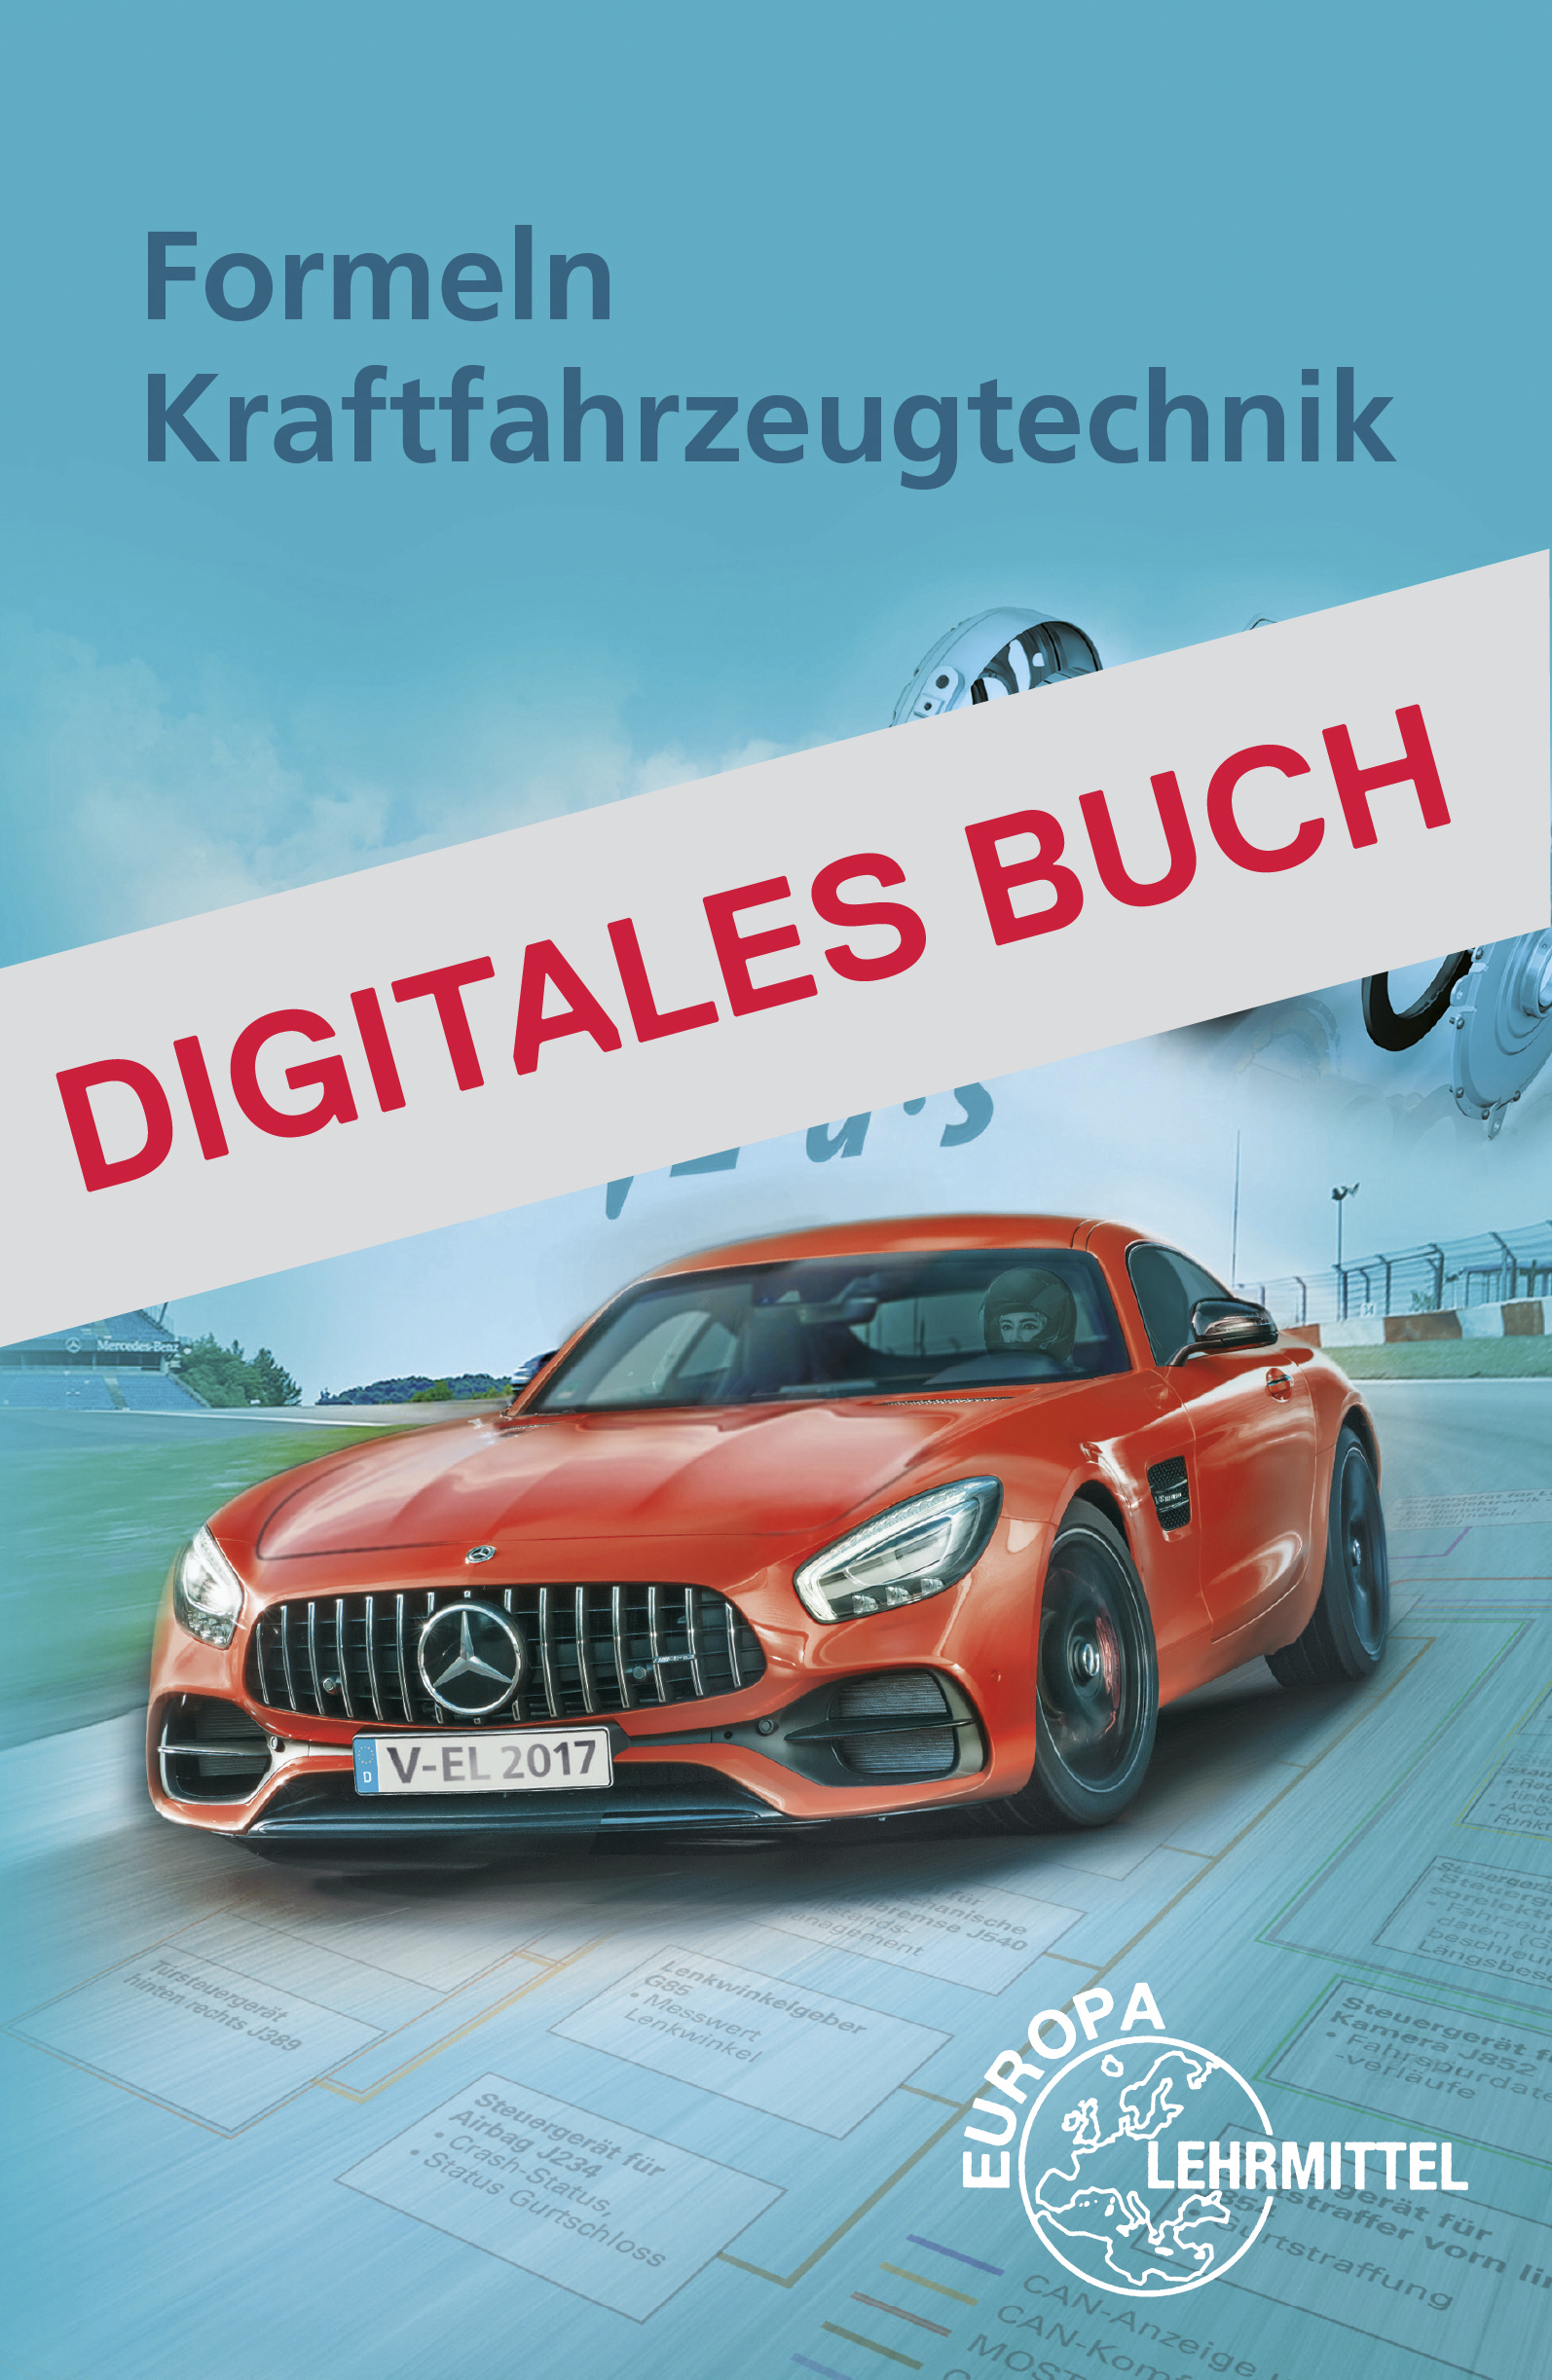 Formeln Kraftfahrzeugtechnik - Digitales Buch